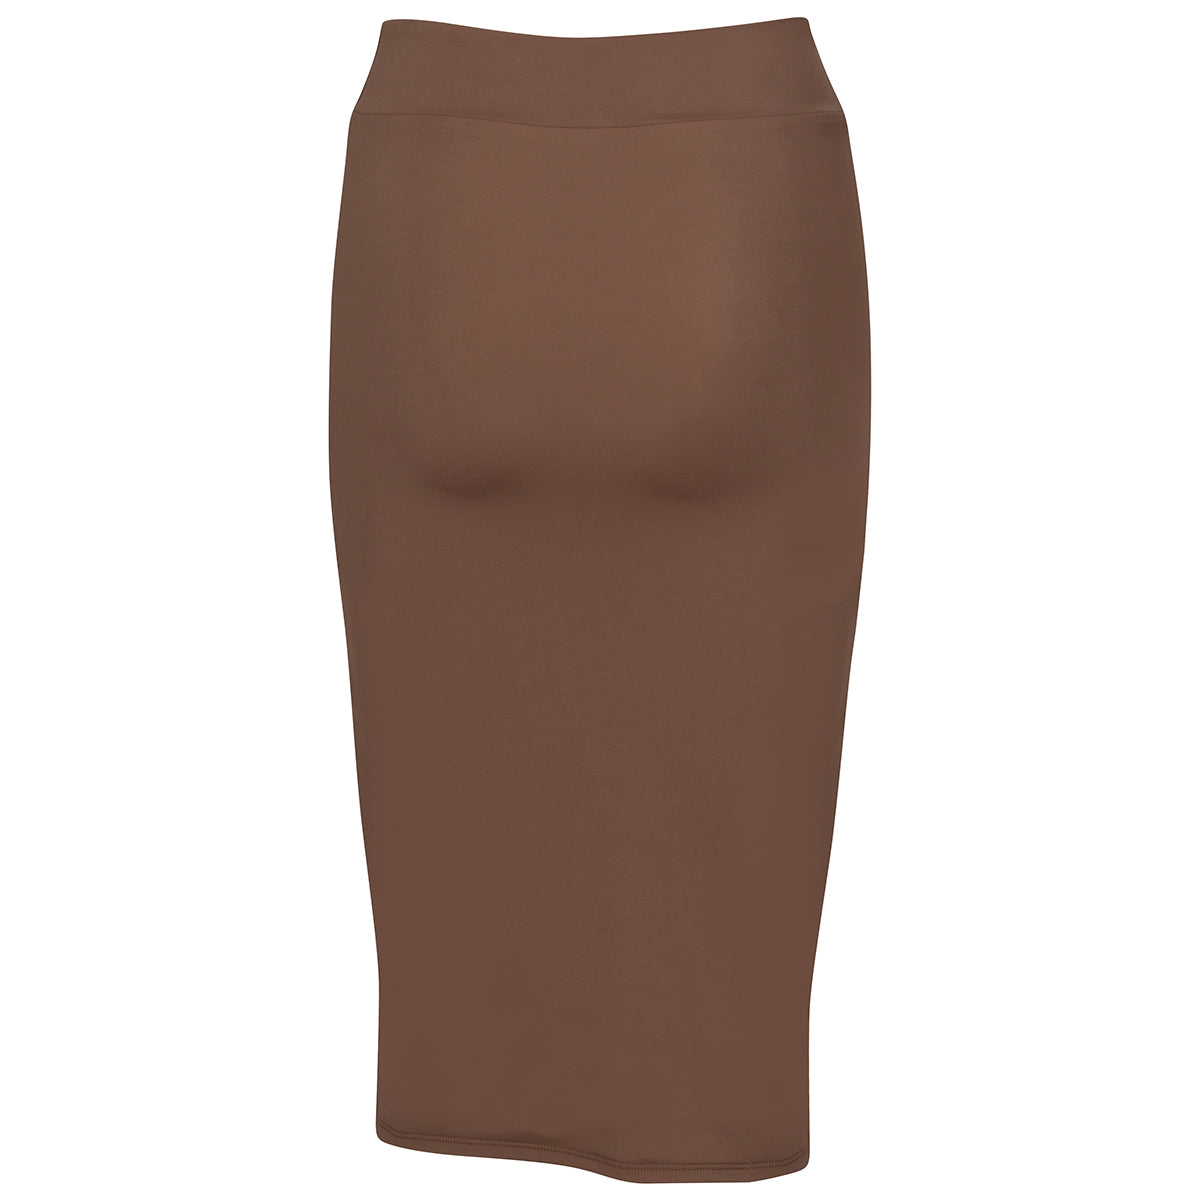 Malibu: The Pencil Slit Skirt